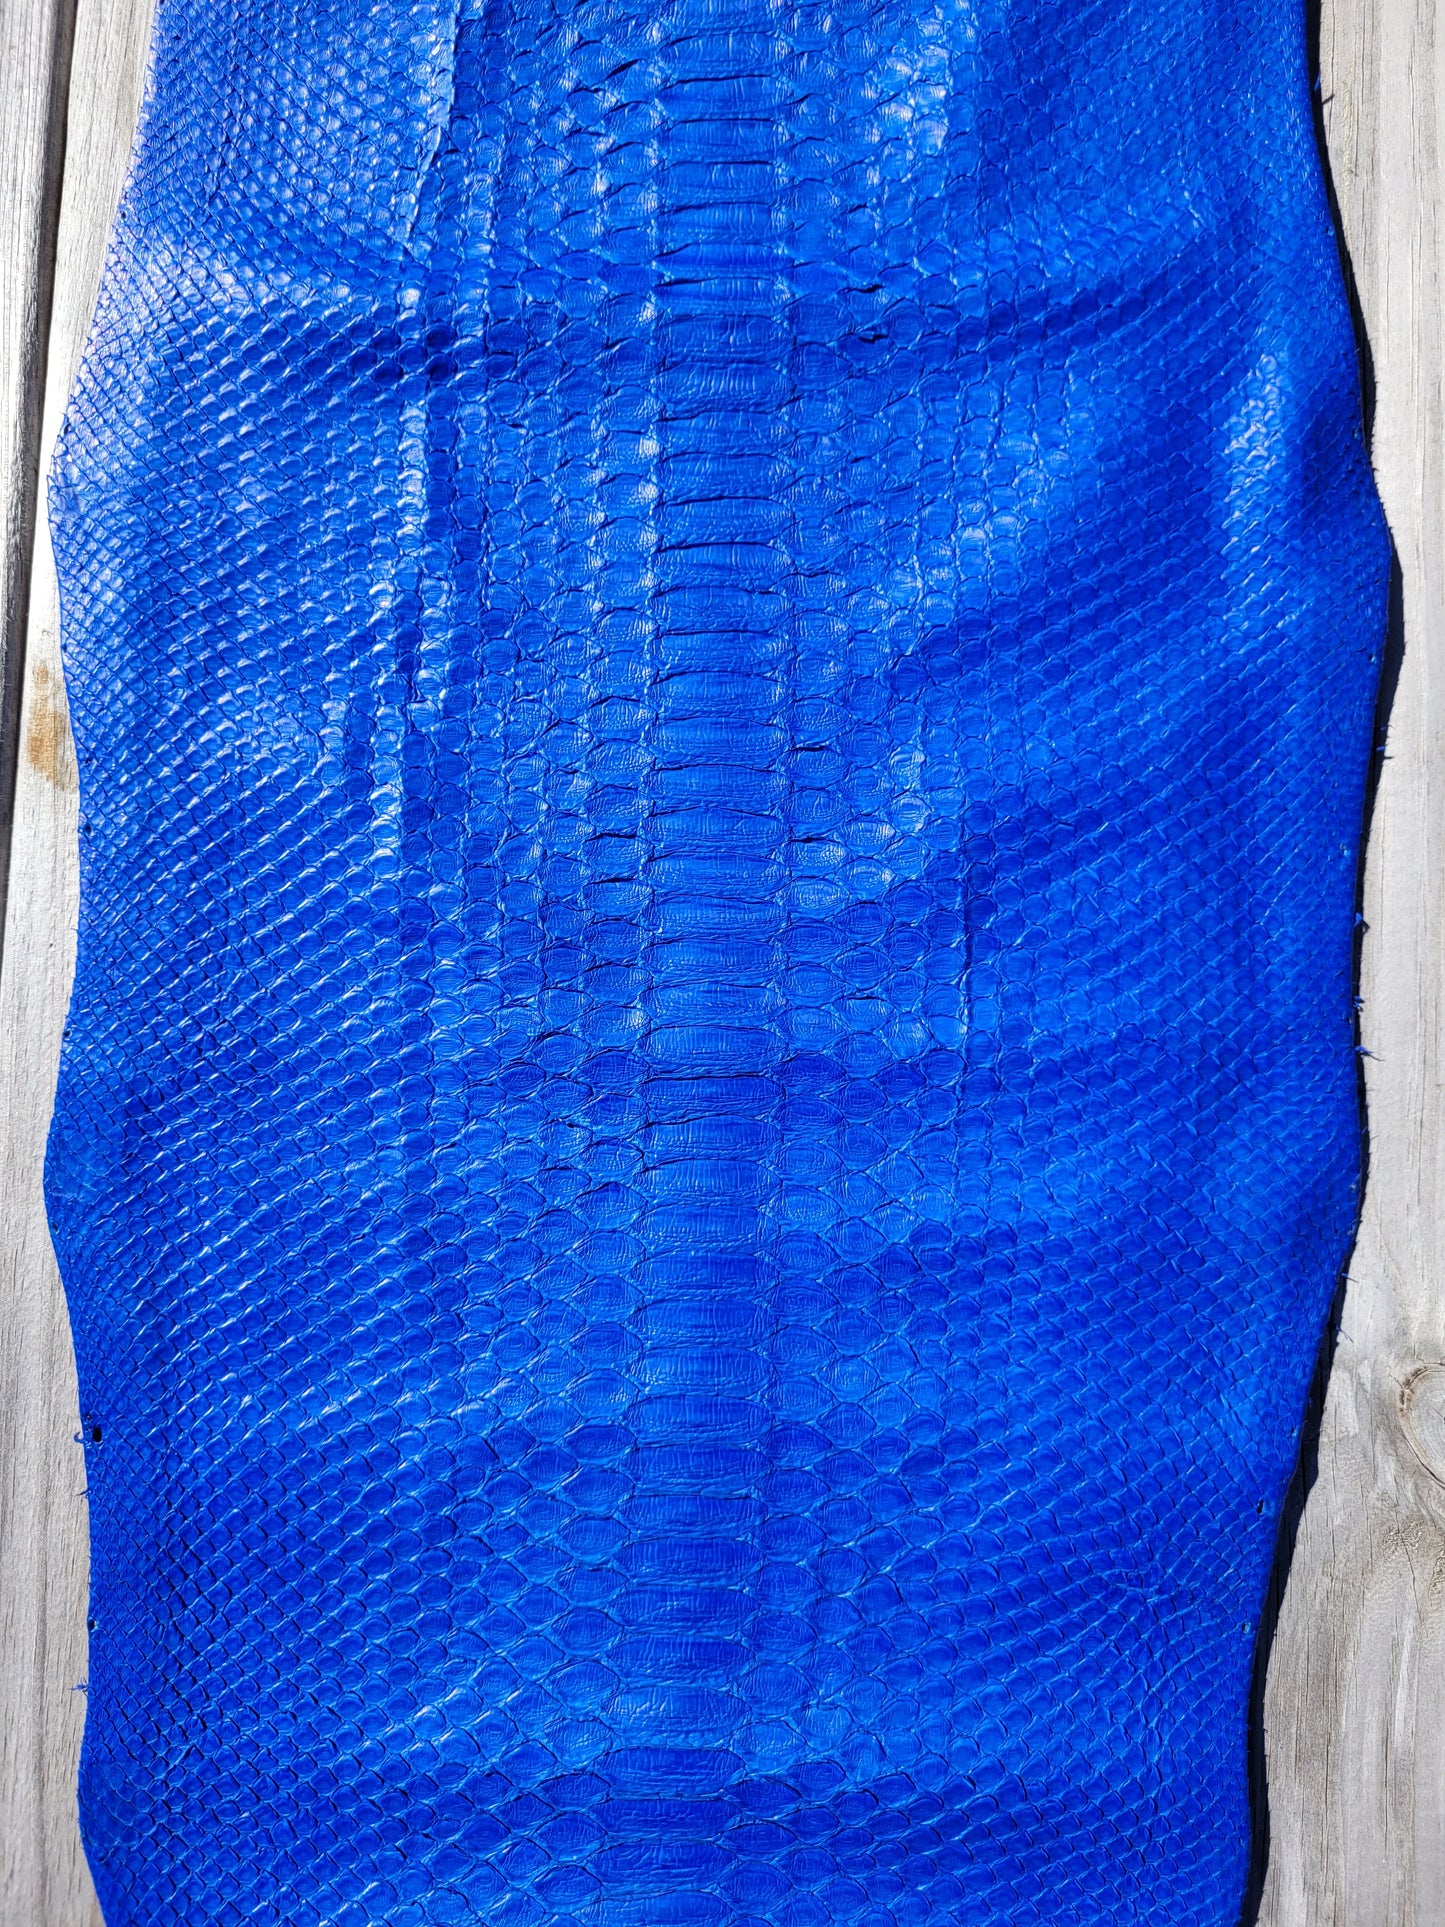 Python Skin - 1.54m - Grade 1 Cobalt Blue (Matte)